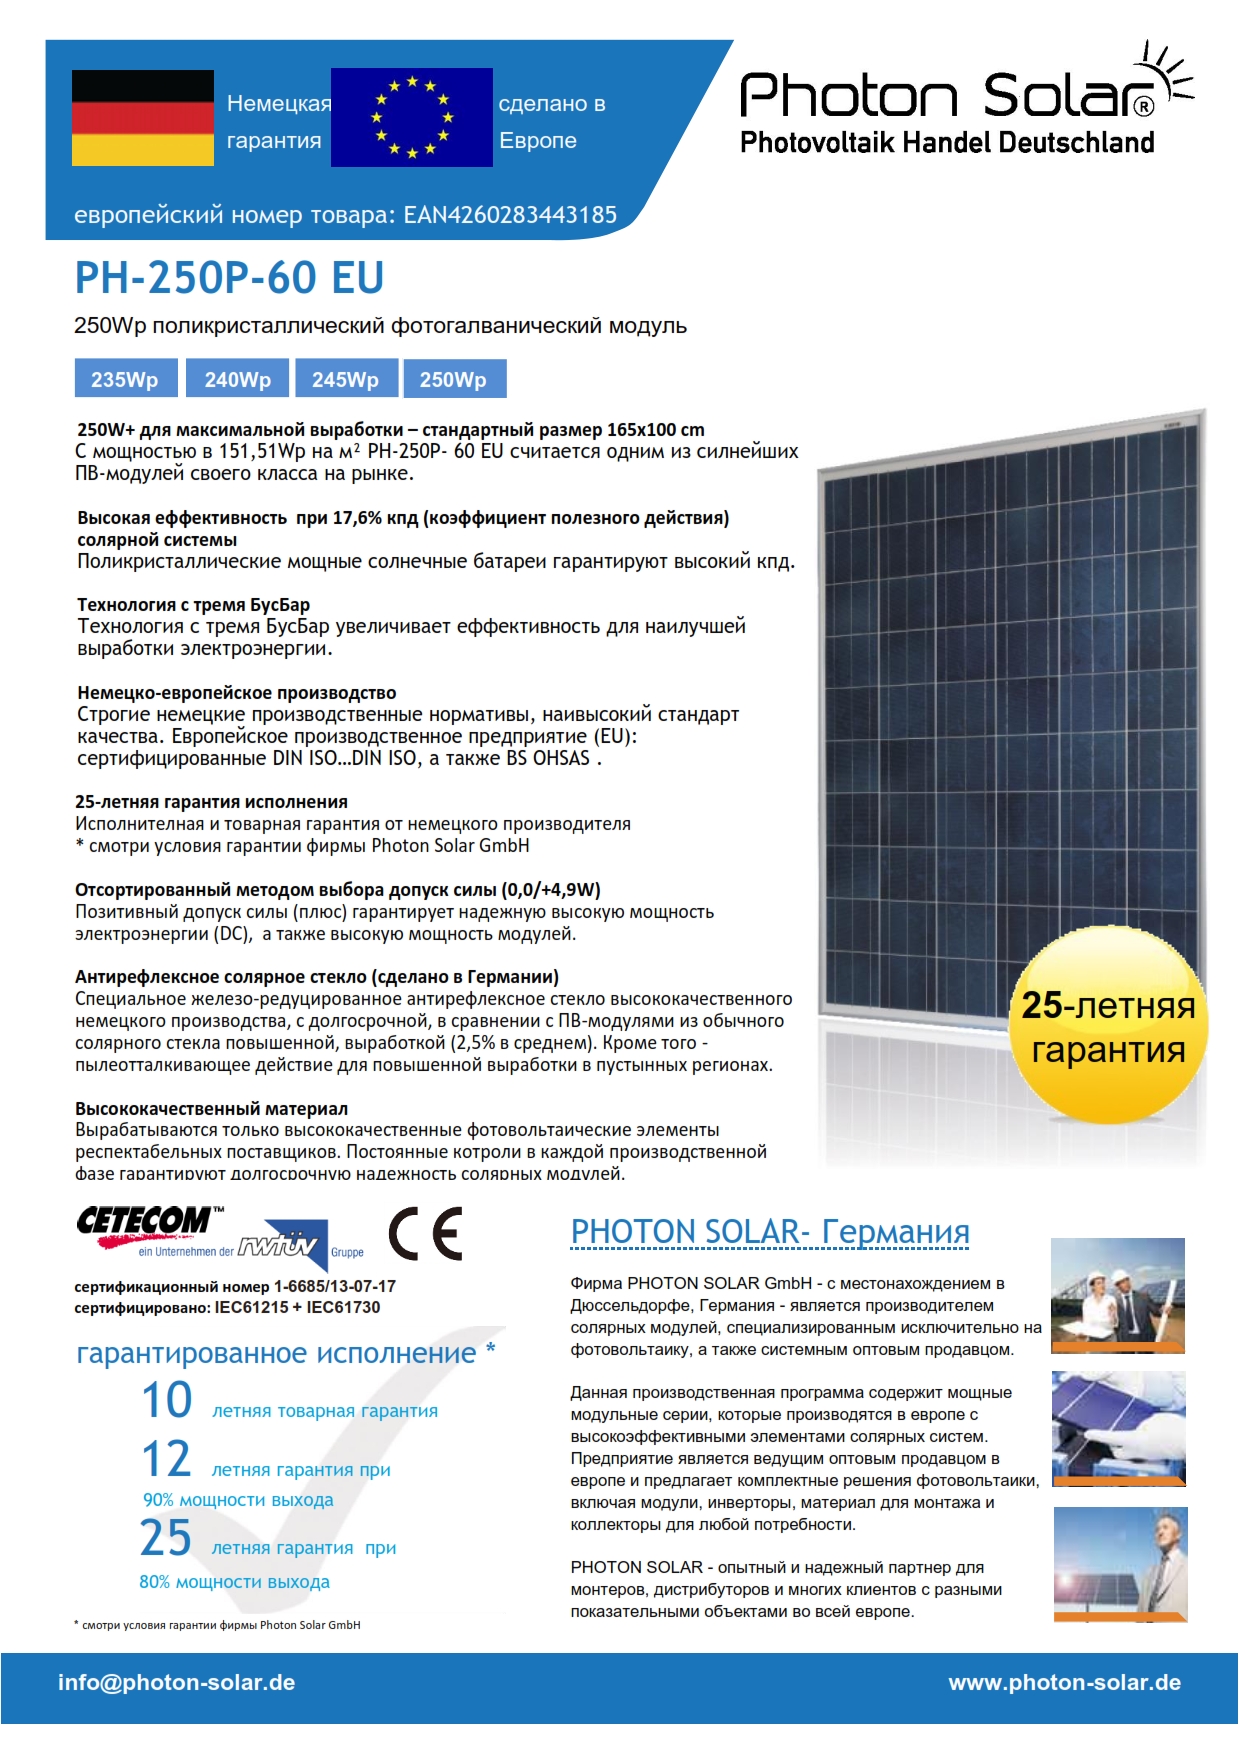 купить фотомодули Photon Solar PH-250P-60, солнечные модули Photon Solar PH-250P-60 цена, фотогальванические модули Photon Solar PH-250P-60 купить